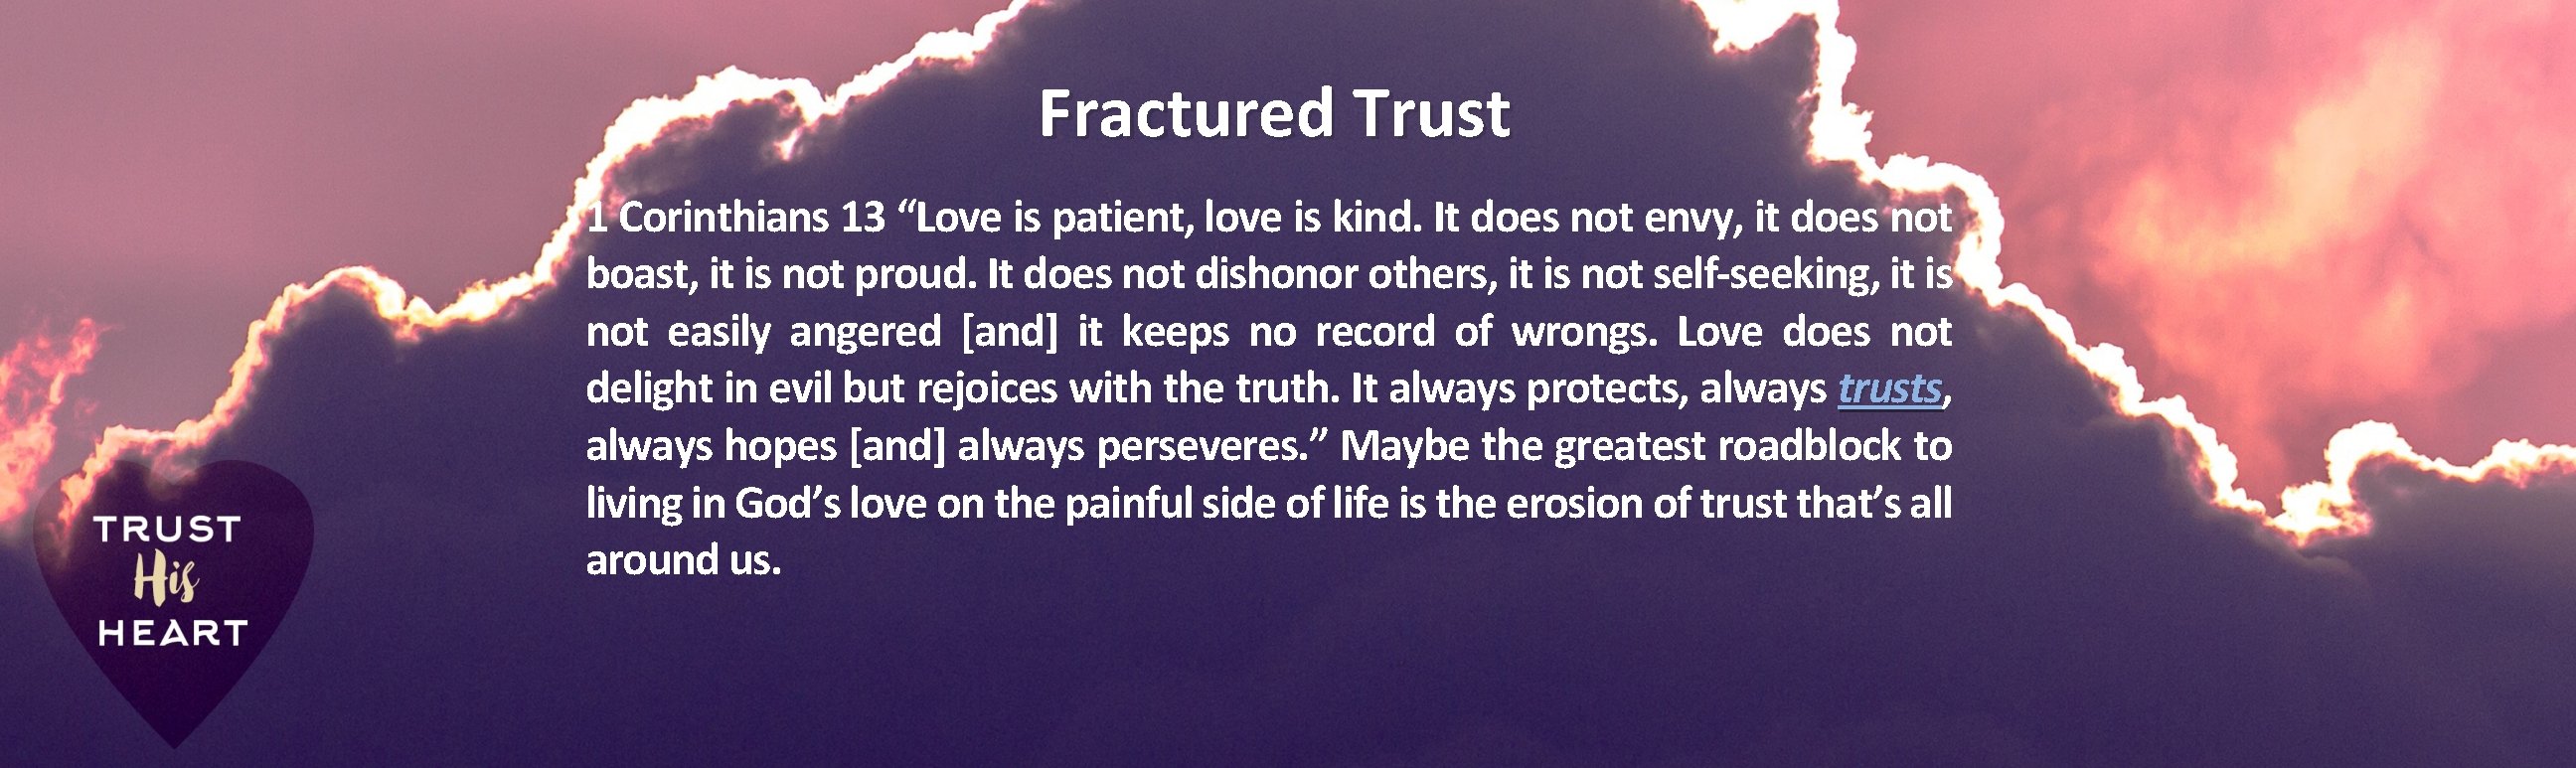 Fractured Trust 1 Corinthians 13 “Love is patient, love is kind. It does not